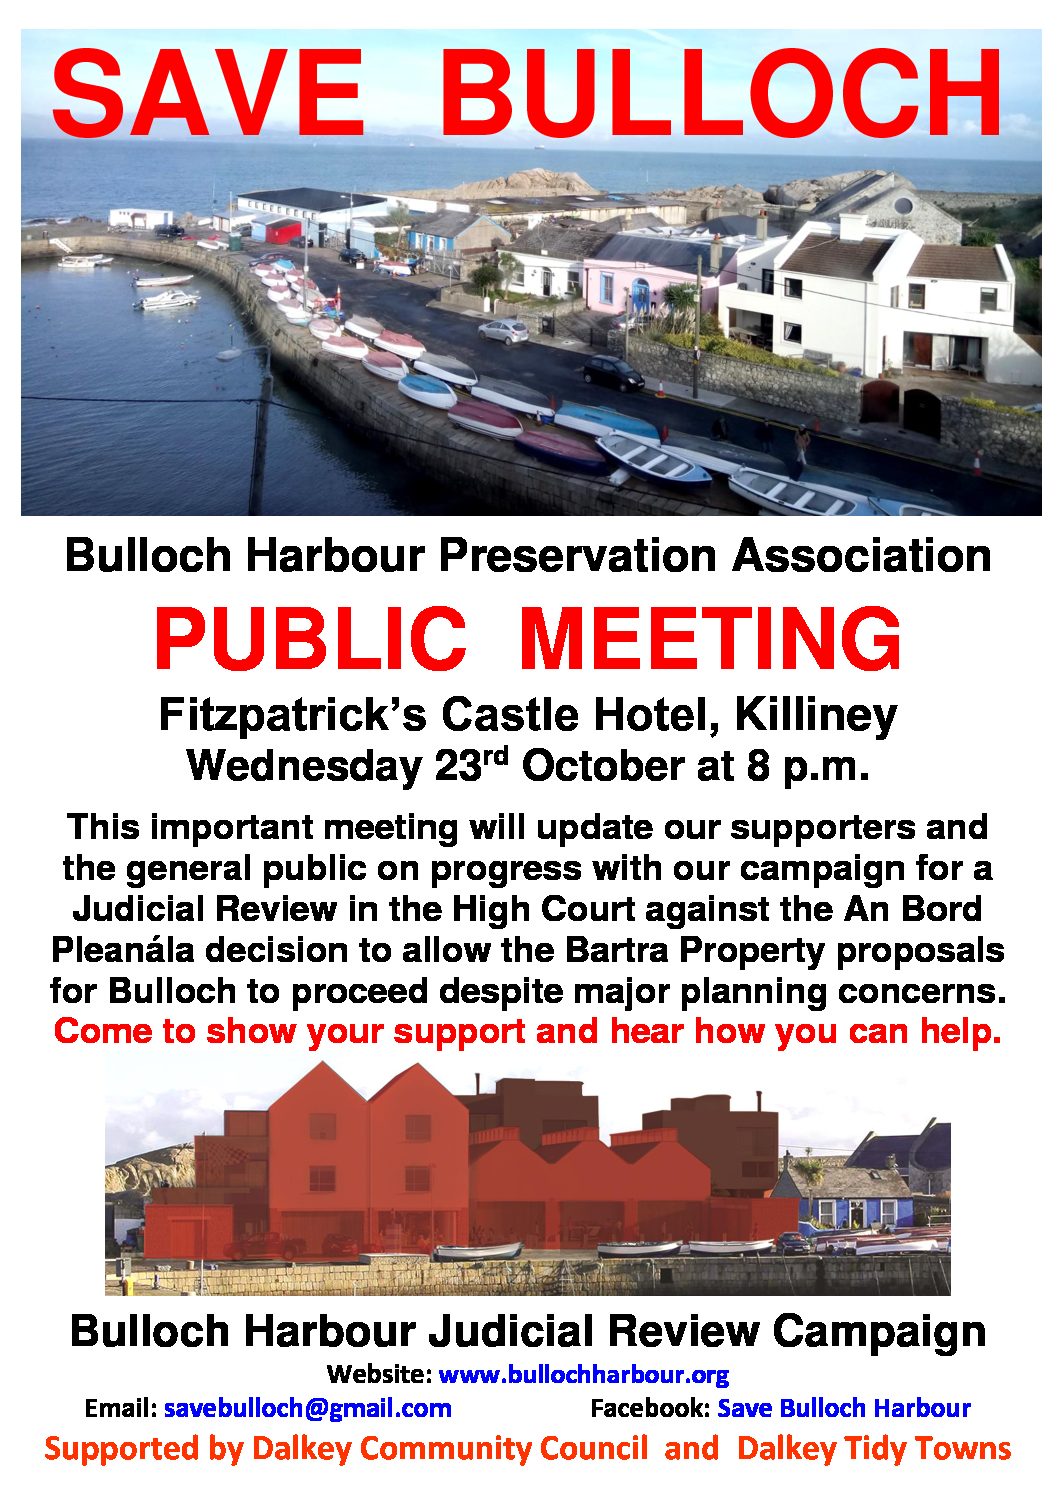 Bulloch Harbour Preservation Association Public Meeting